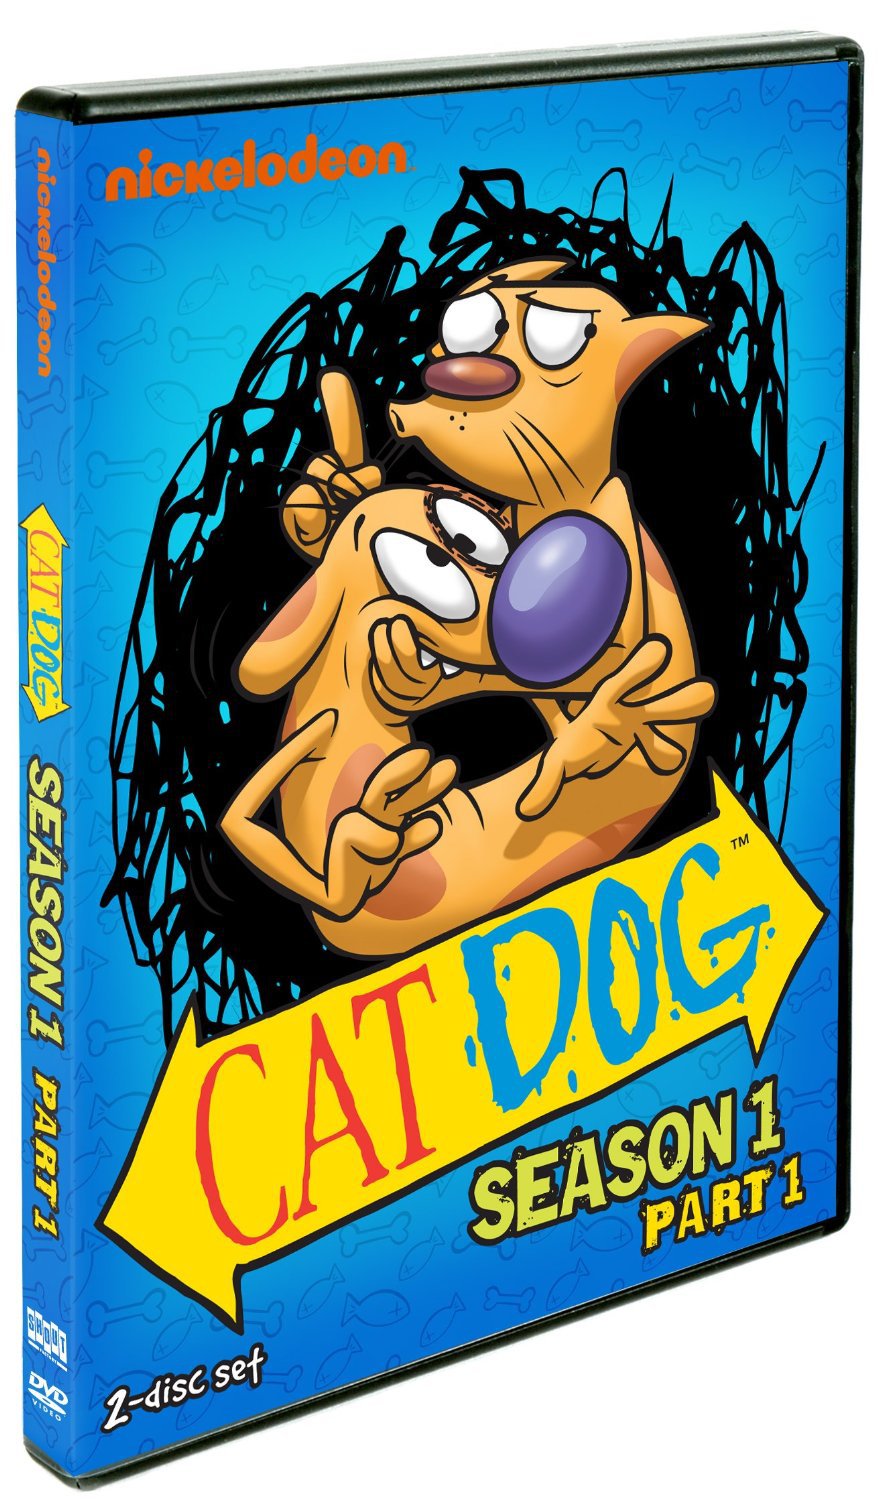 Cat Dog: Season 1 Part 1